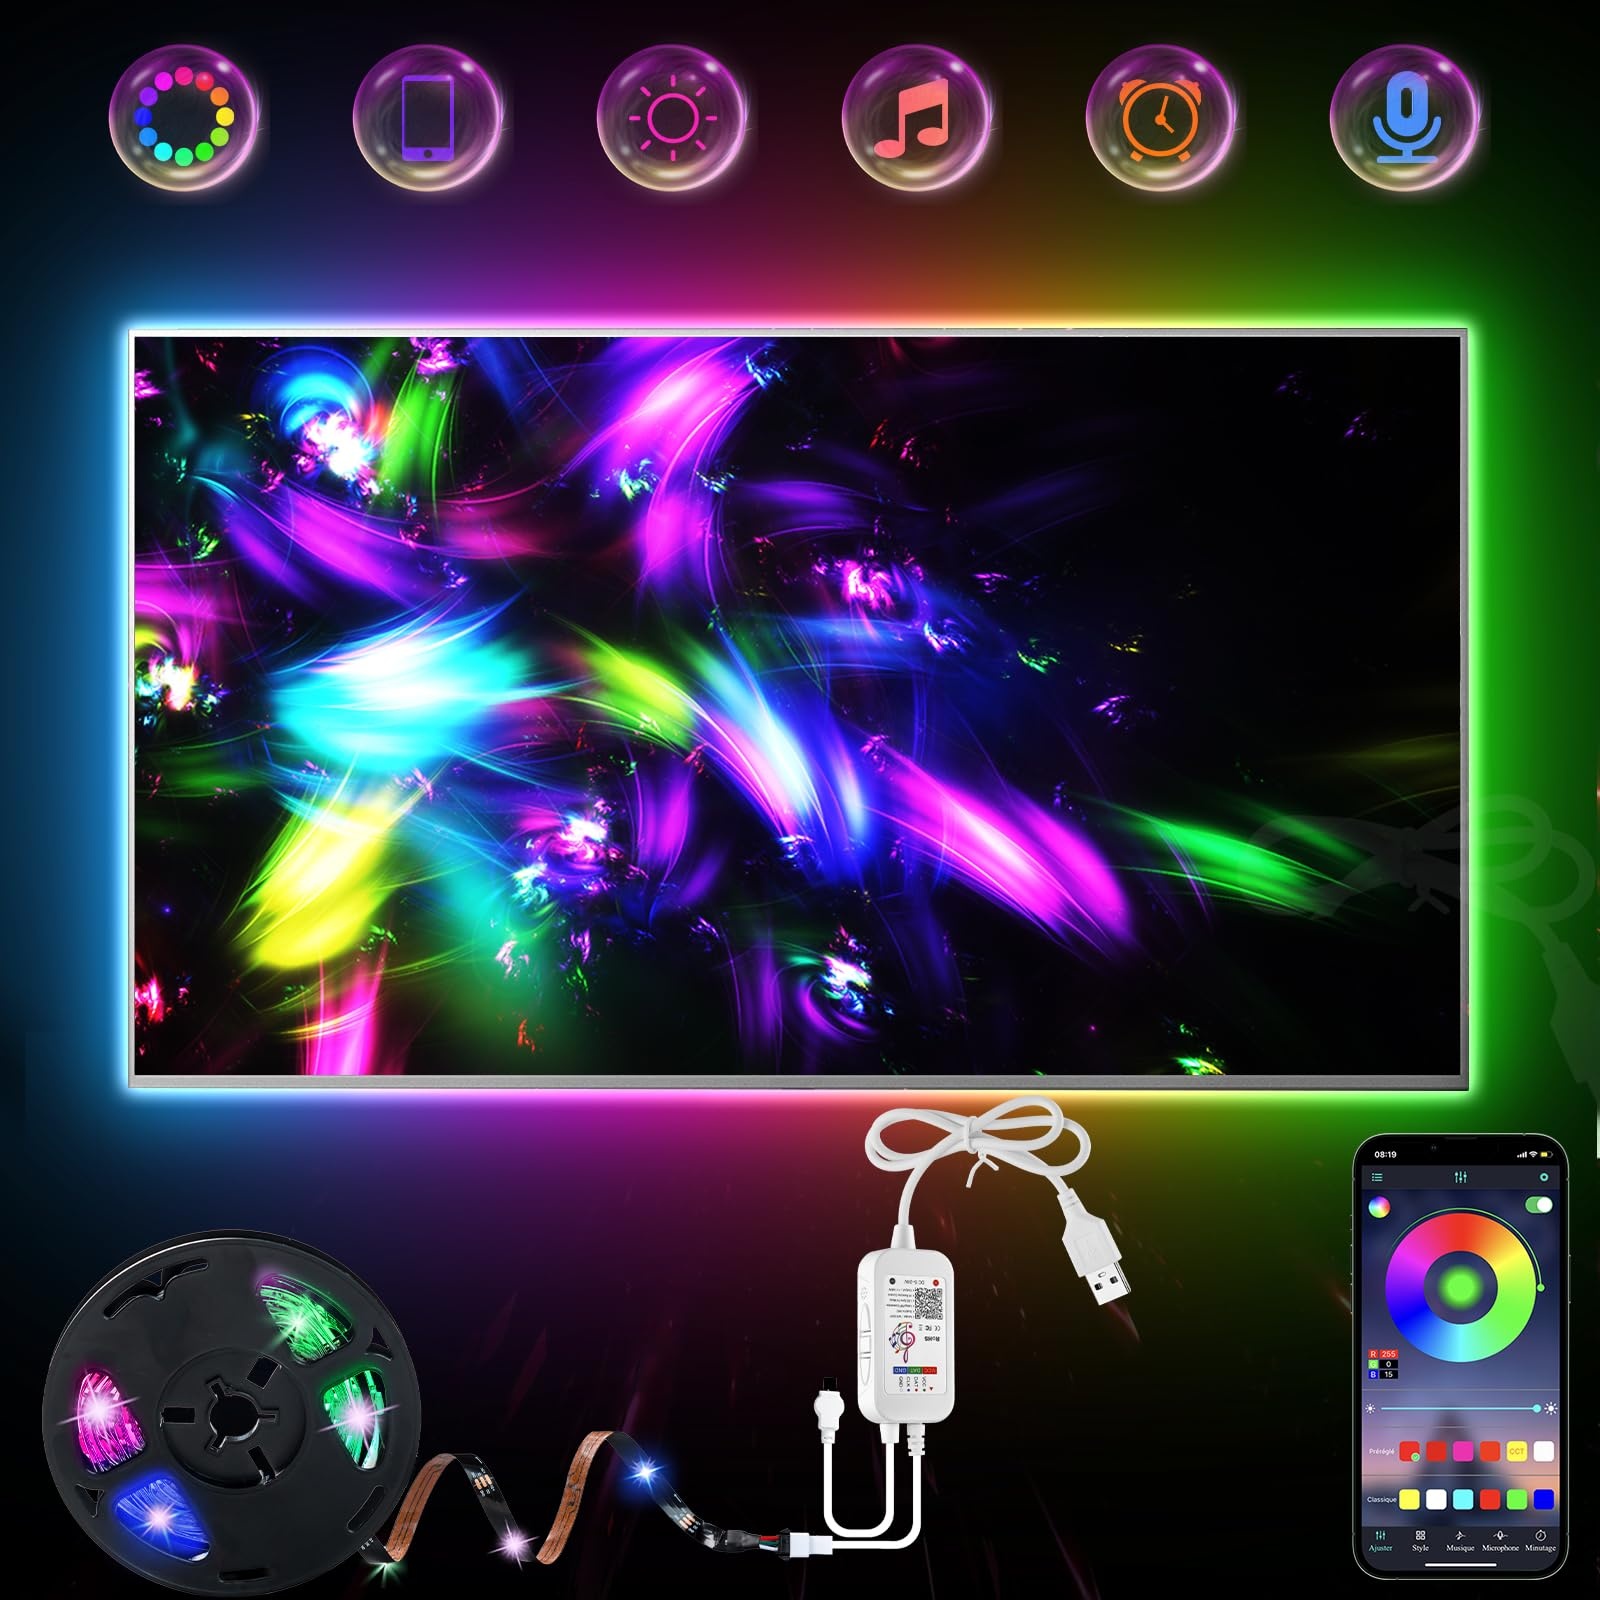 LED Strip 4m, LED TV Hintergrundbeleuchtung für 55 bis 75 zoll TVs, Steuerbar mit App, RGB LED Streifen Smart LED Backlight, USB Led 5050 Beleuchtung